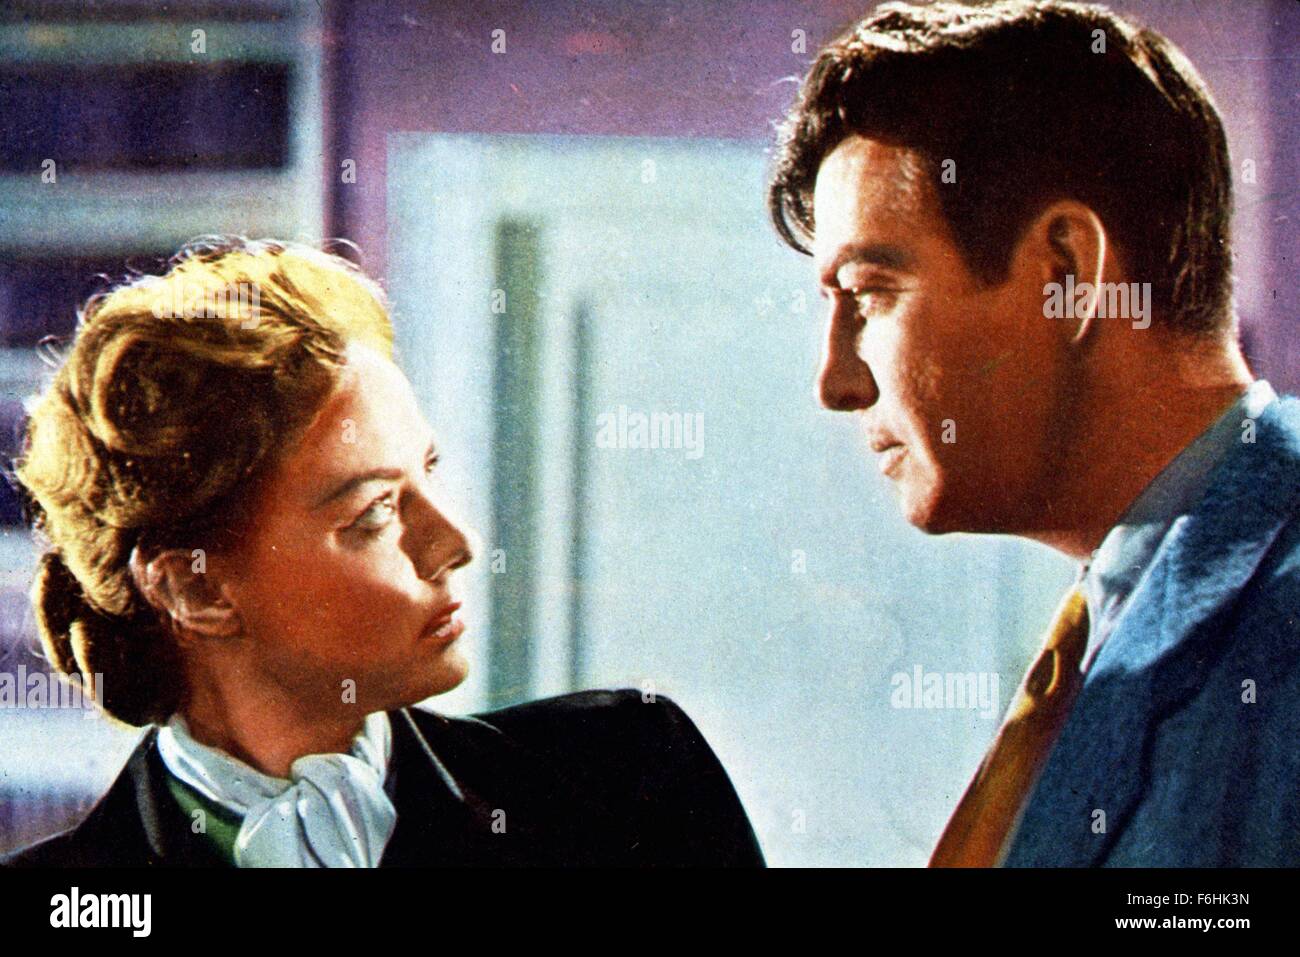 1947, Filmtitel: hohe Wand, Regie: CURTIS BERNHARDT, Studio: MGM, im Bild: CURTIS BERNHARDT, ROBERT TAYLOR. (Bild Kredit: SNAP) Stockfoto